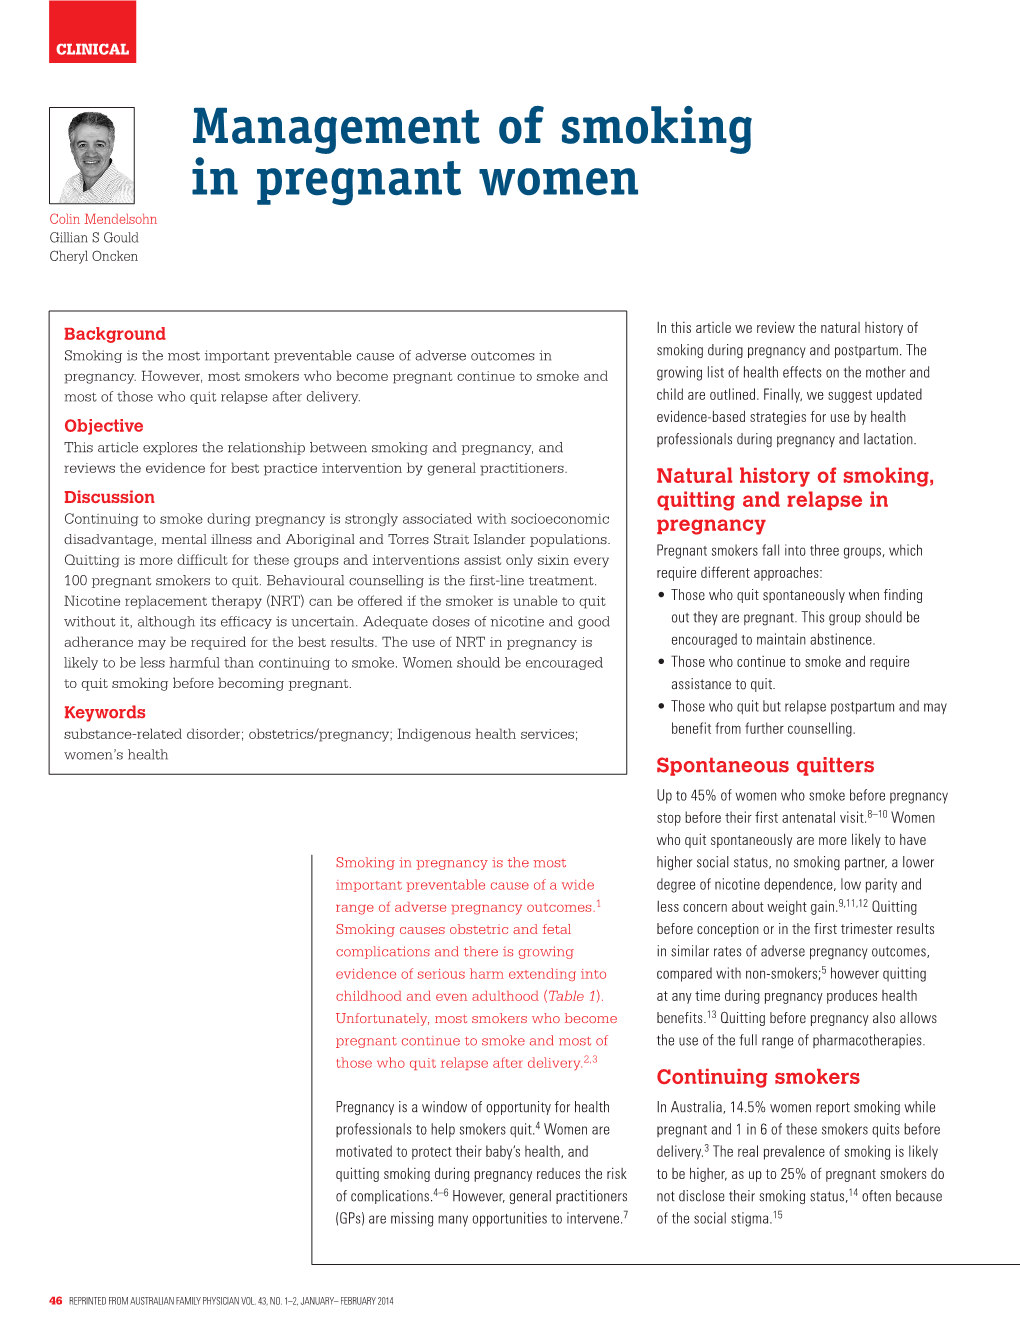 Management of Smoking in Pregnant Women Colin Mendelsohn Gillian S Gould Cheryl Oncken